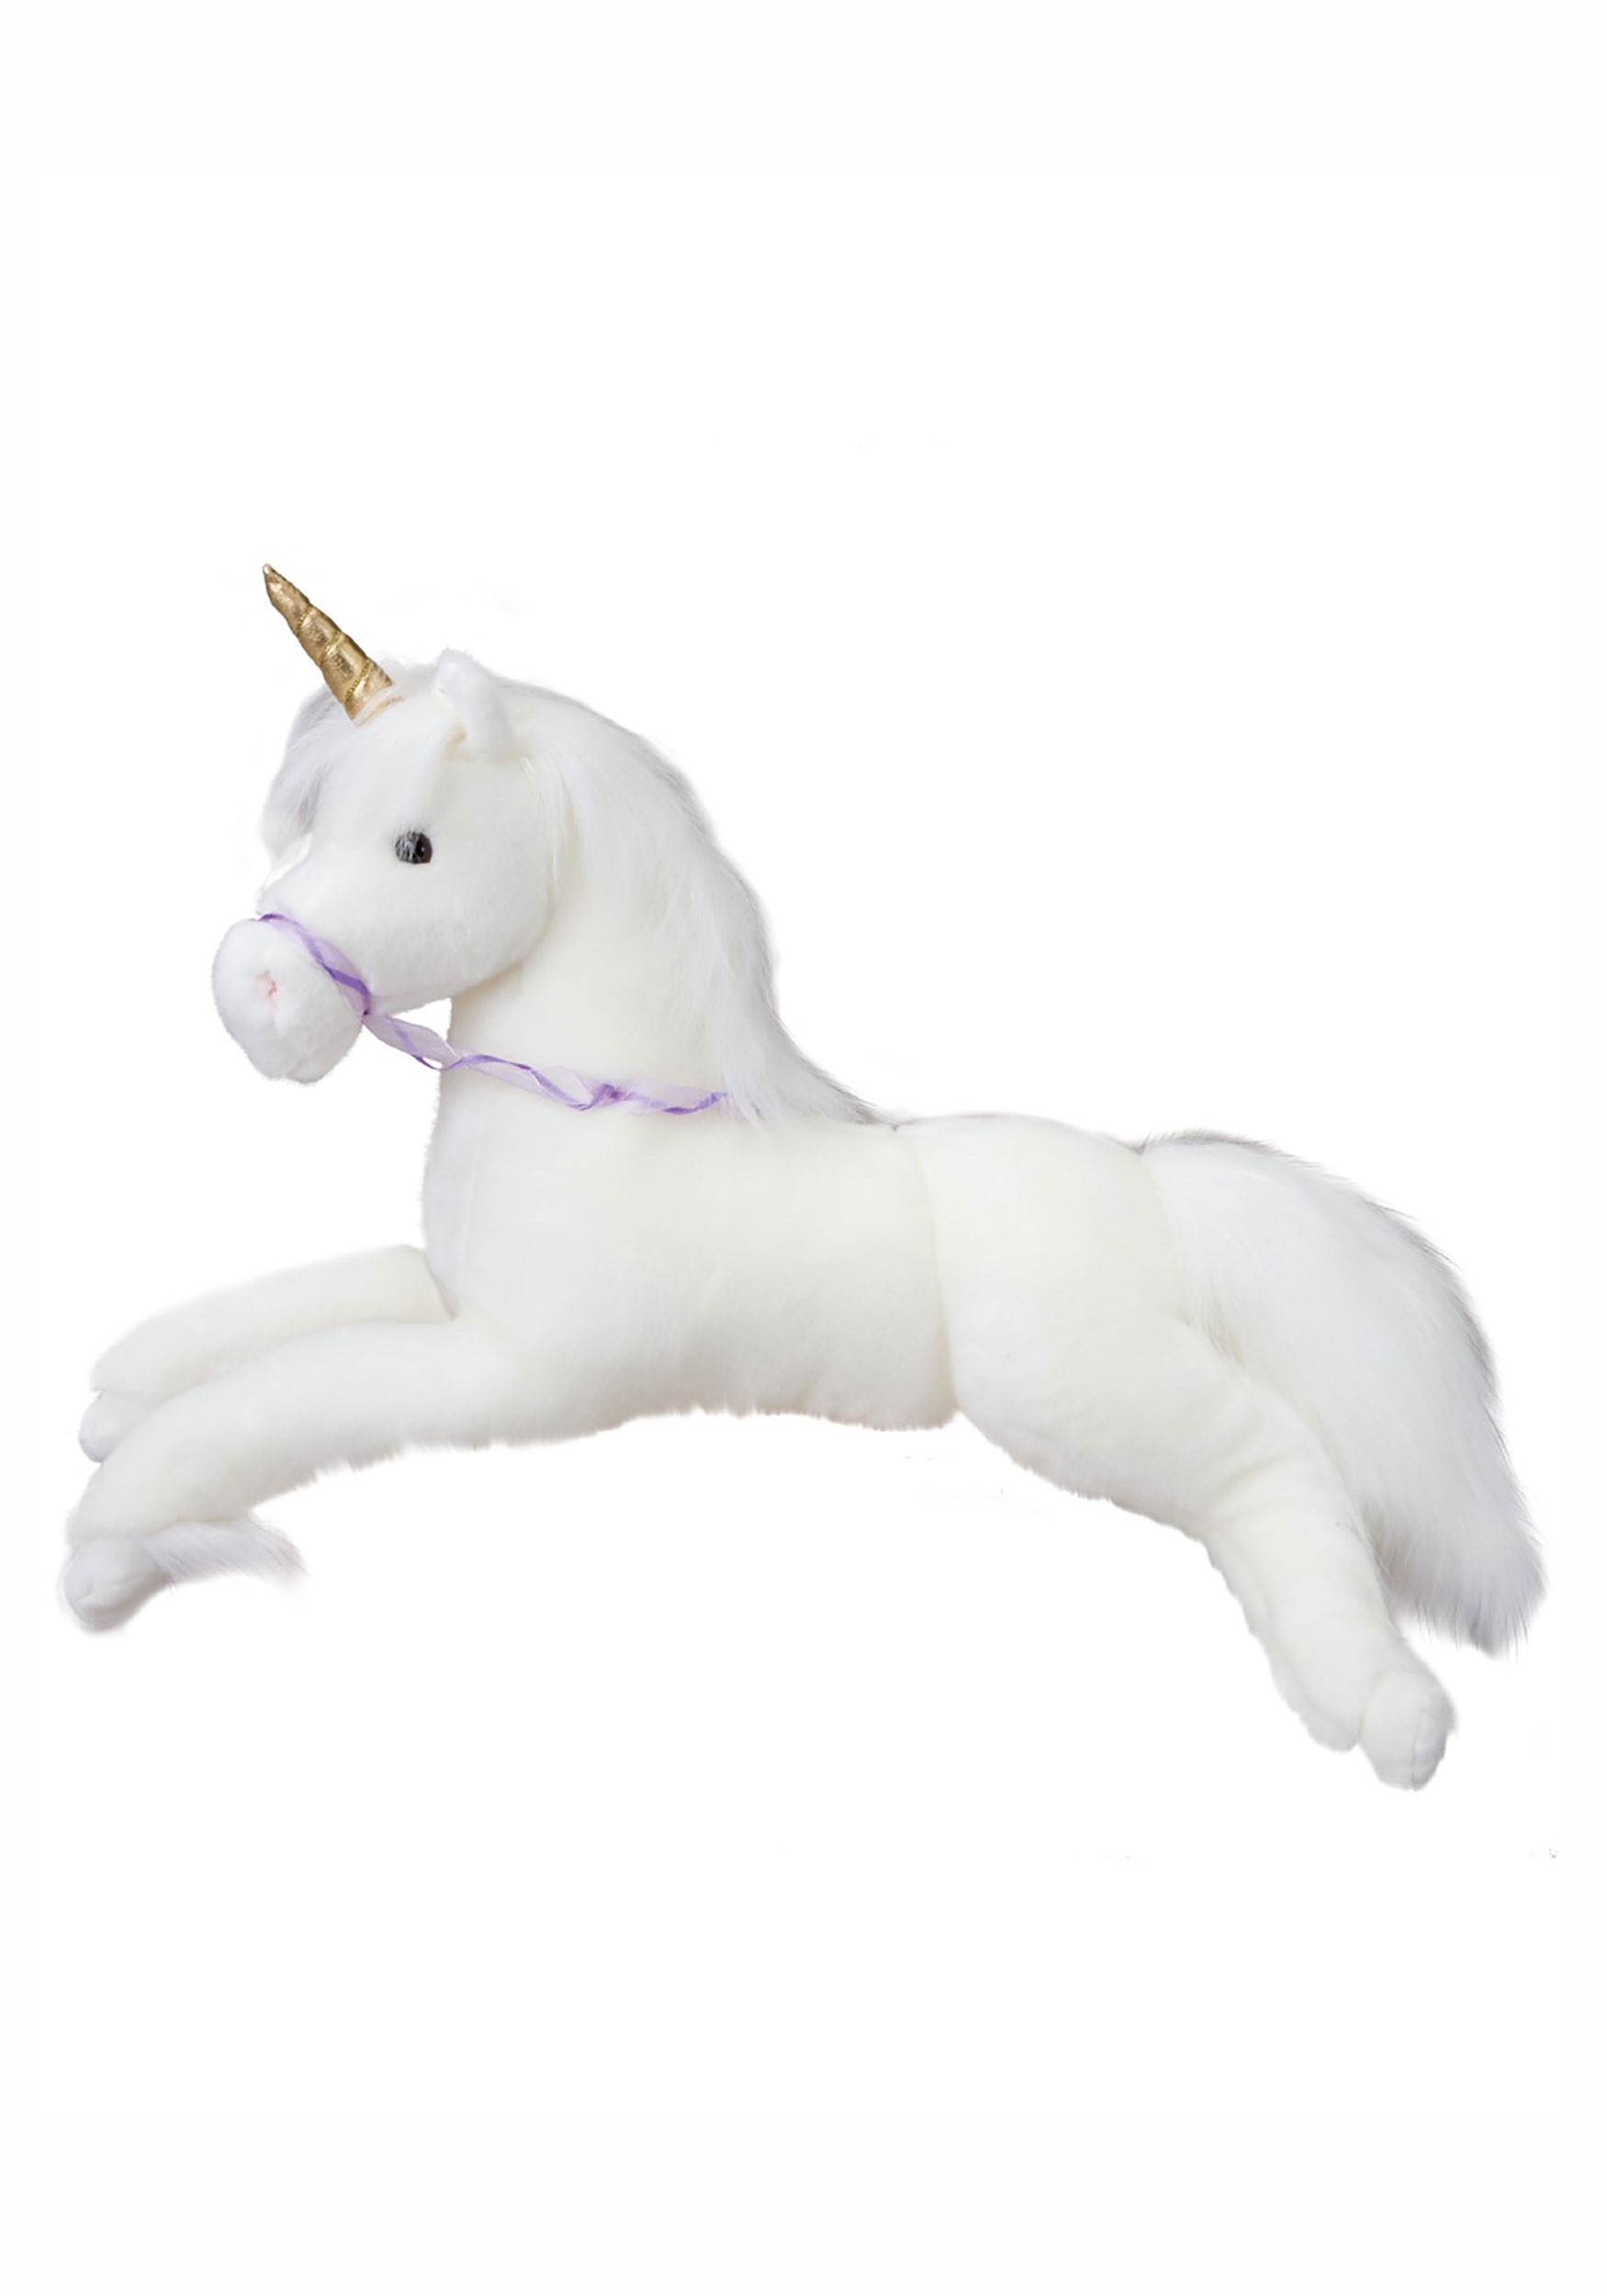 27in long Abracadabra the Unicorn Plush